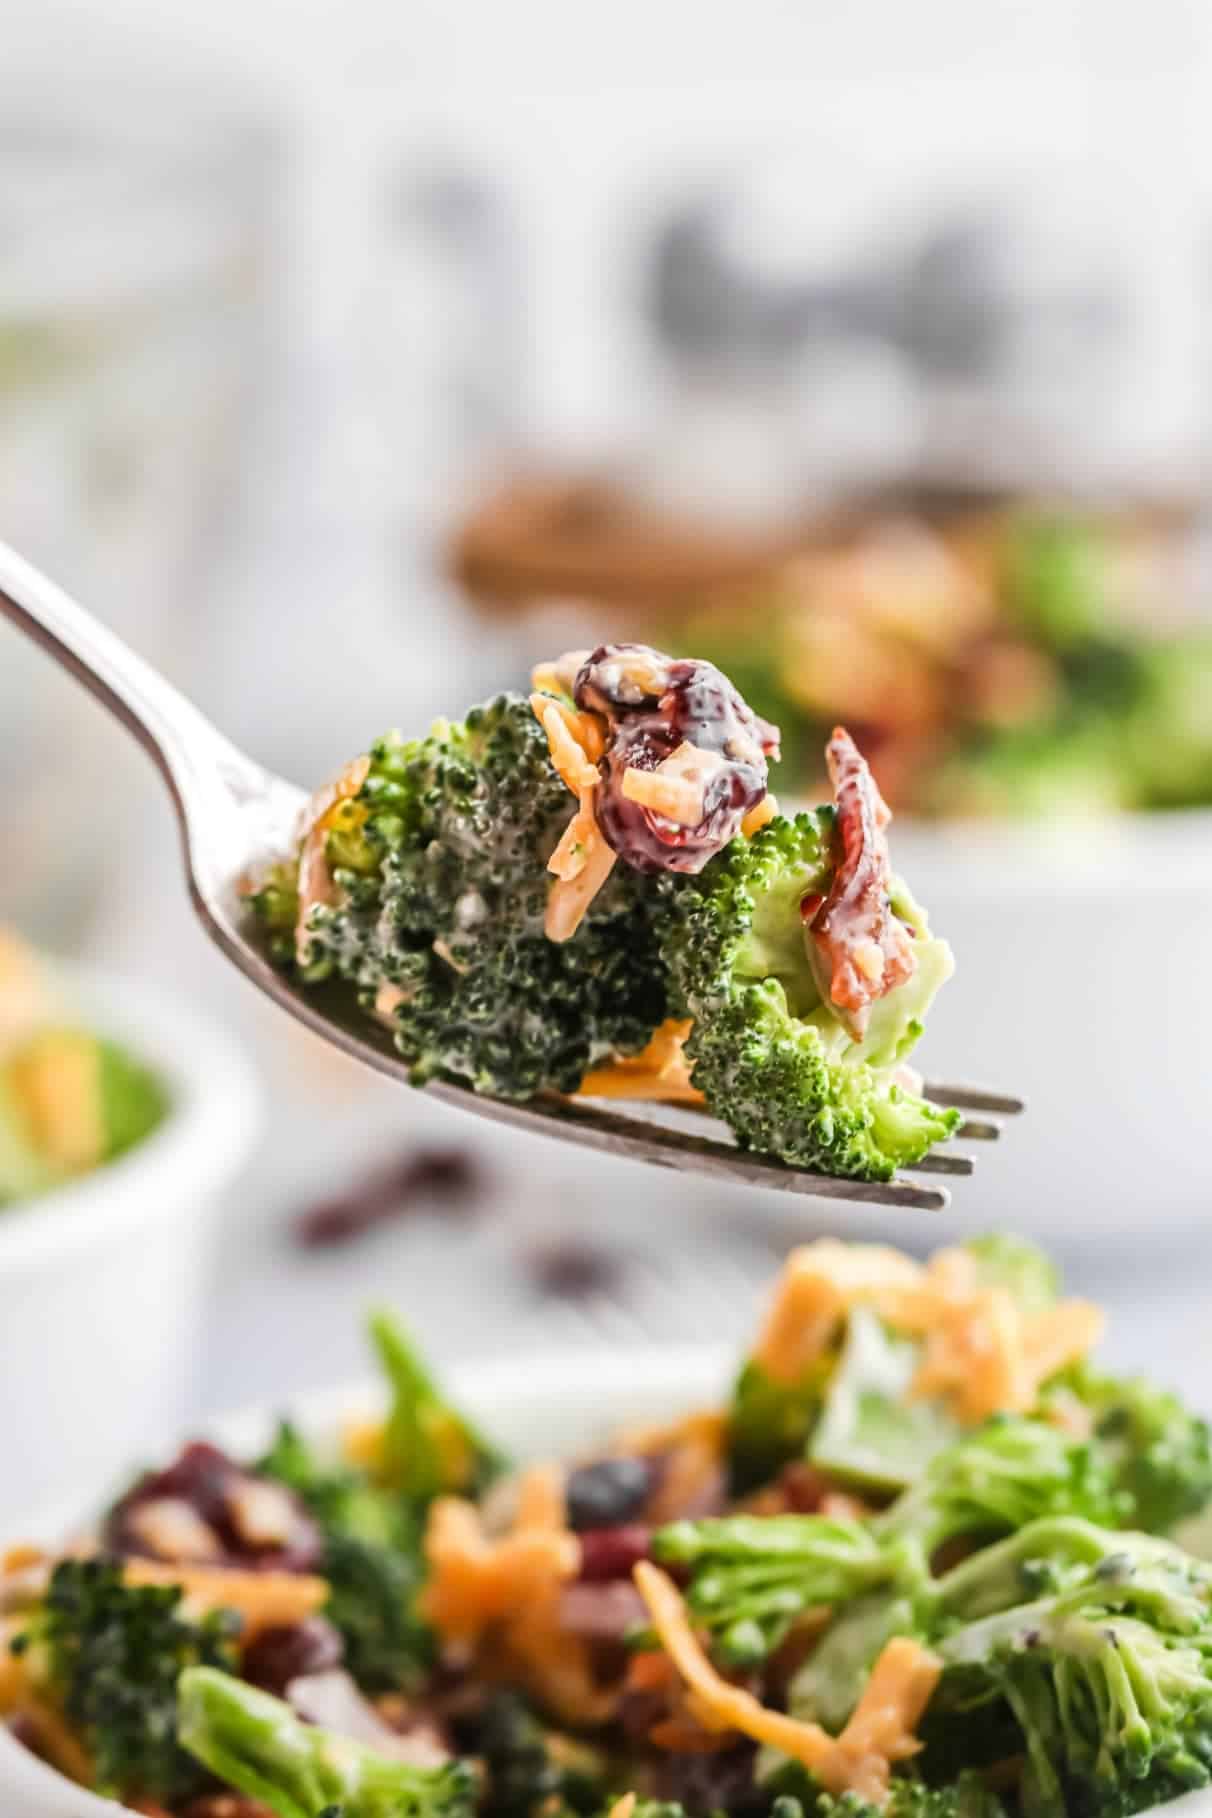 Broccoli salad bite on a fork.